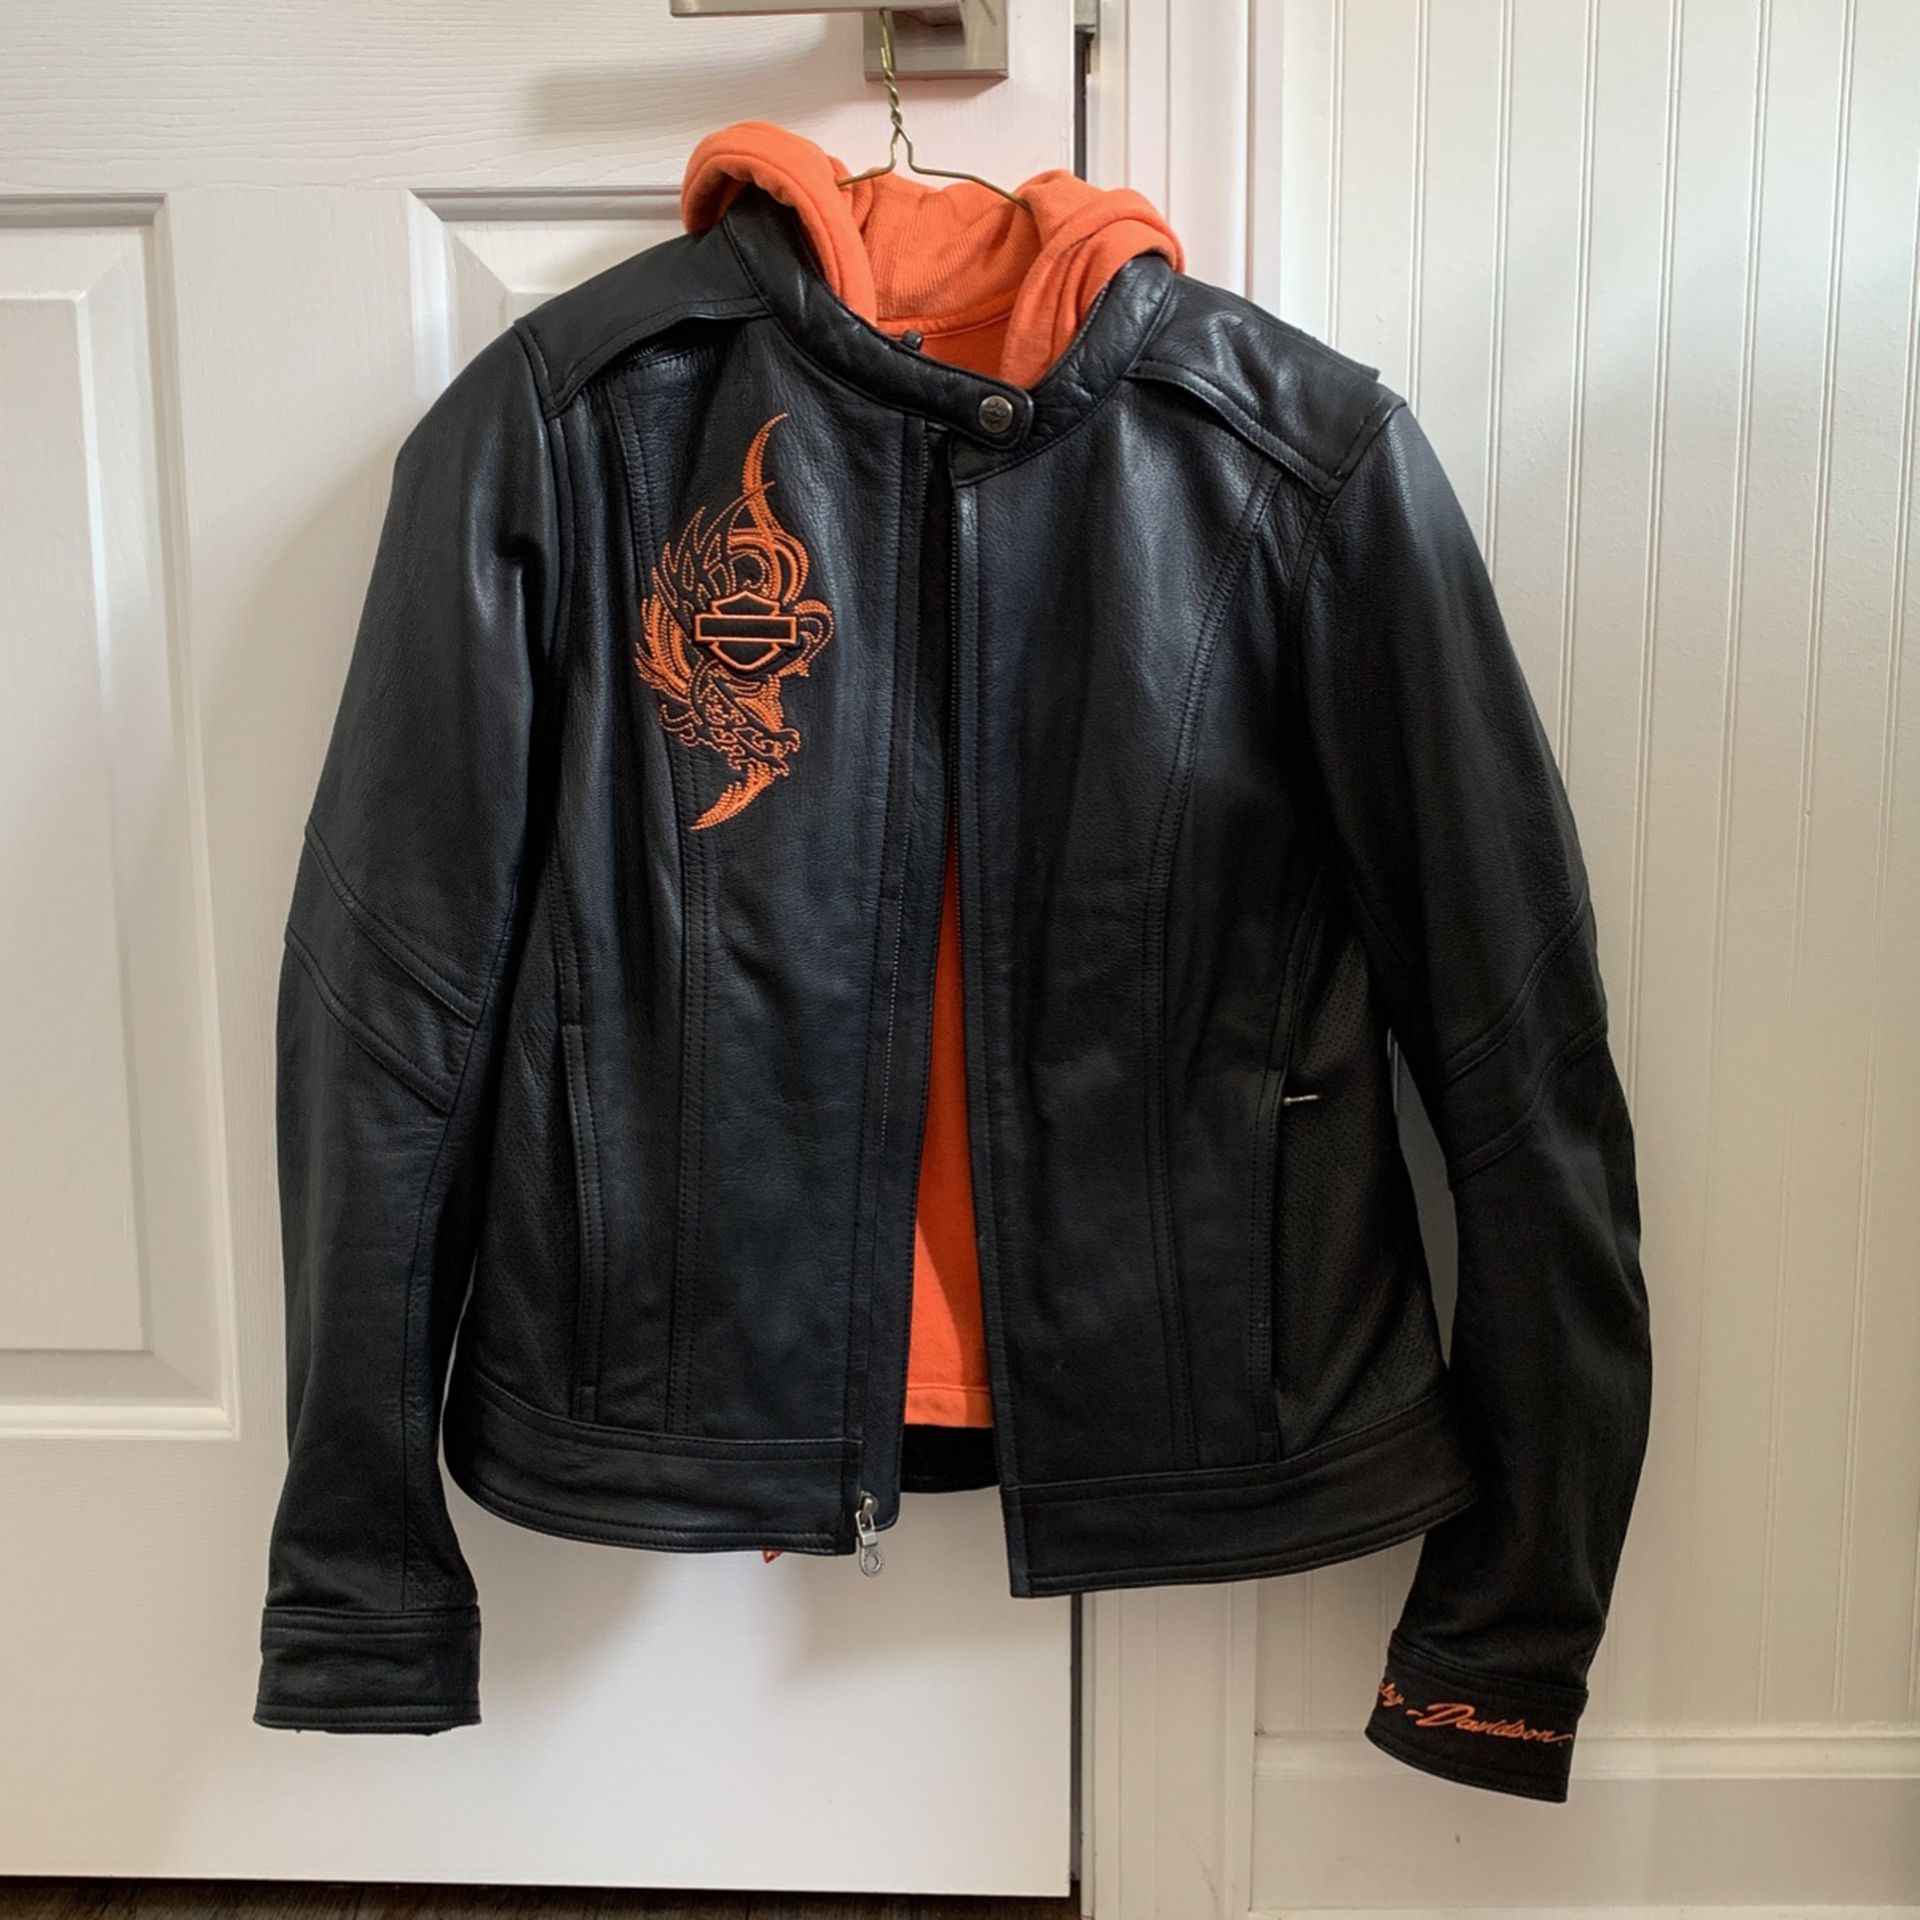 Harley Davidson Leather Jacket sized SM (for Women)